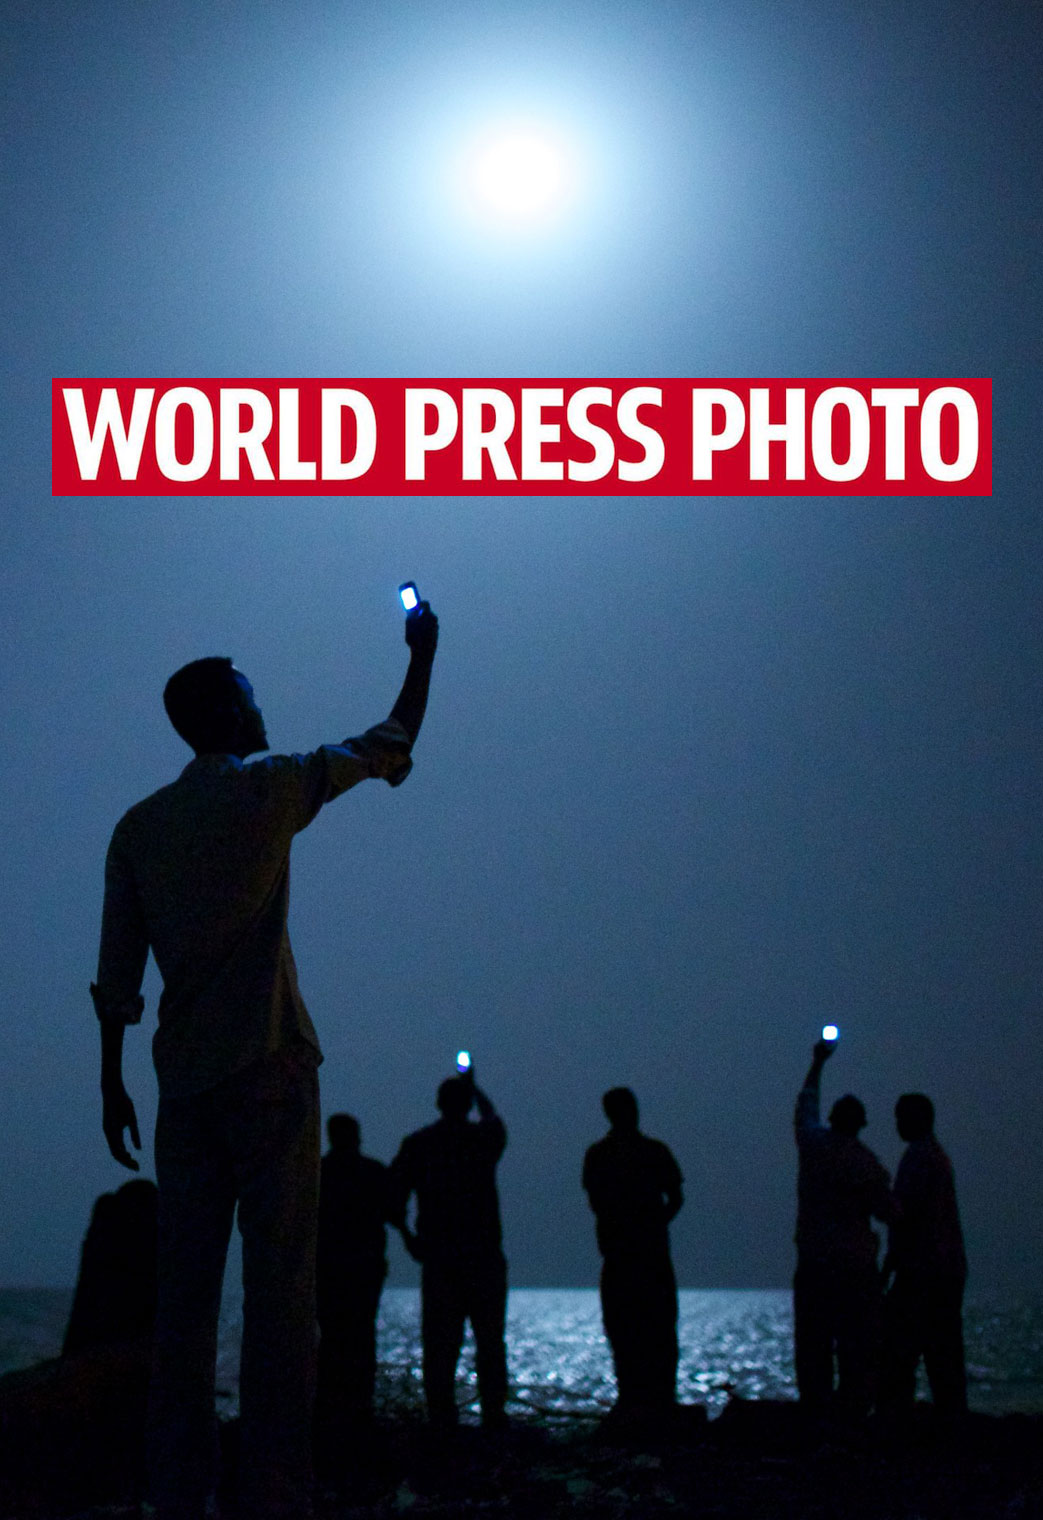 WORLD PRESS PHOTO